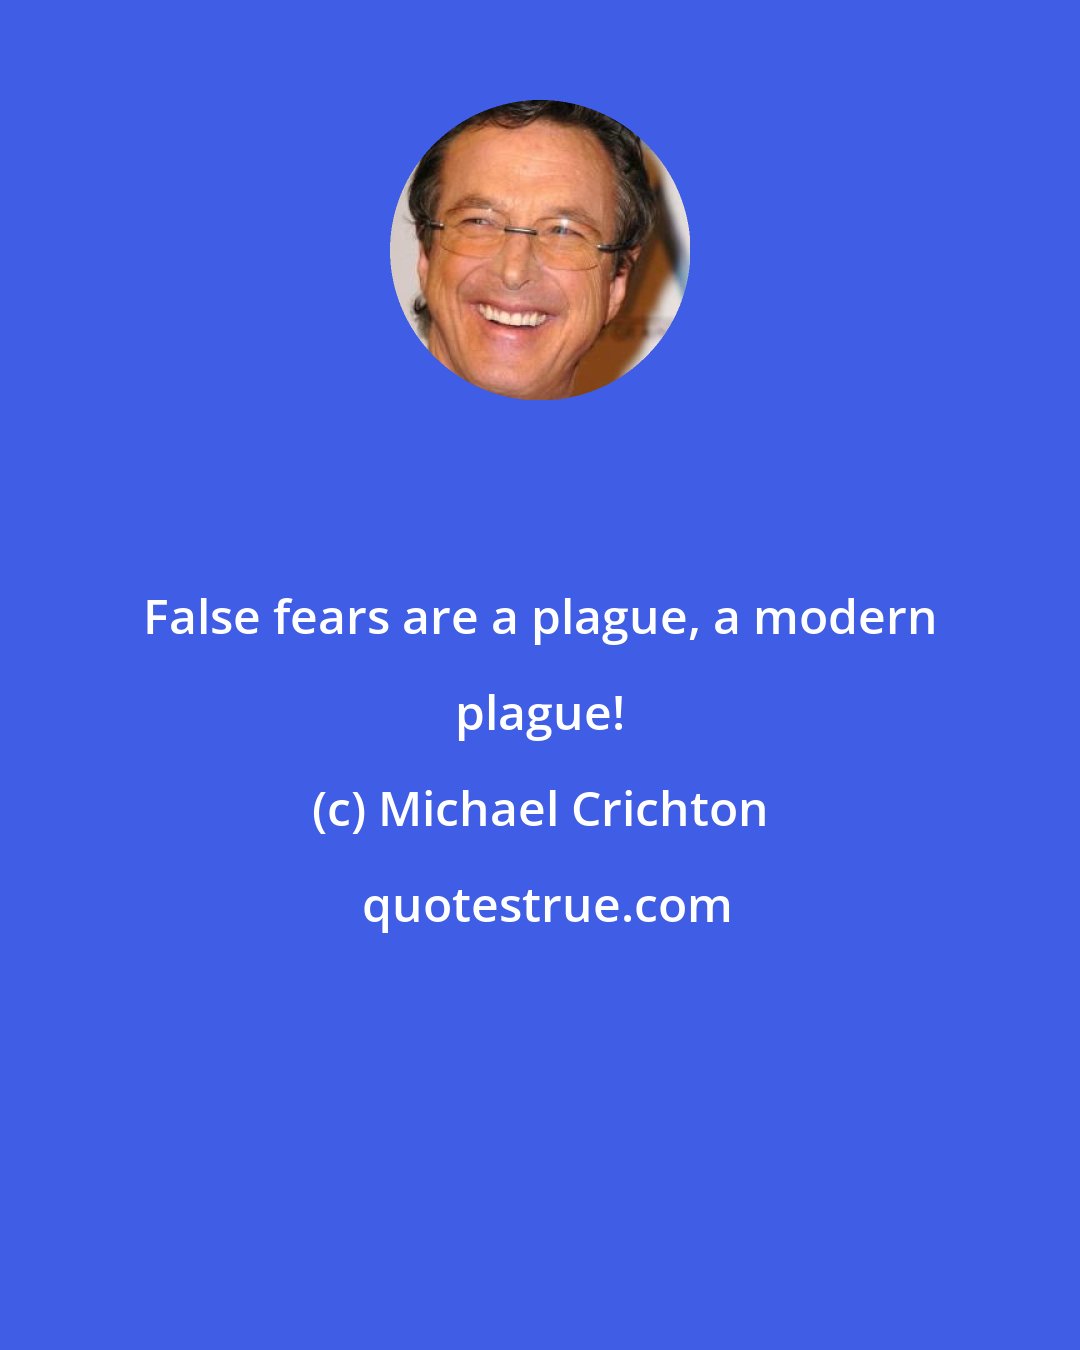 Michael Crichton: False fears are a plague, a modern plague!